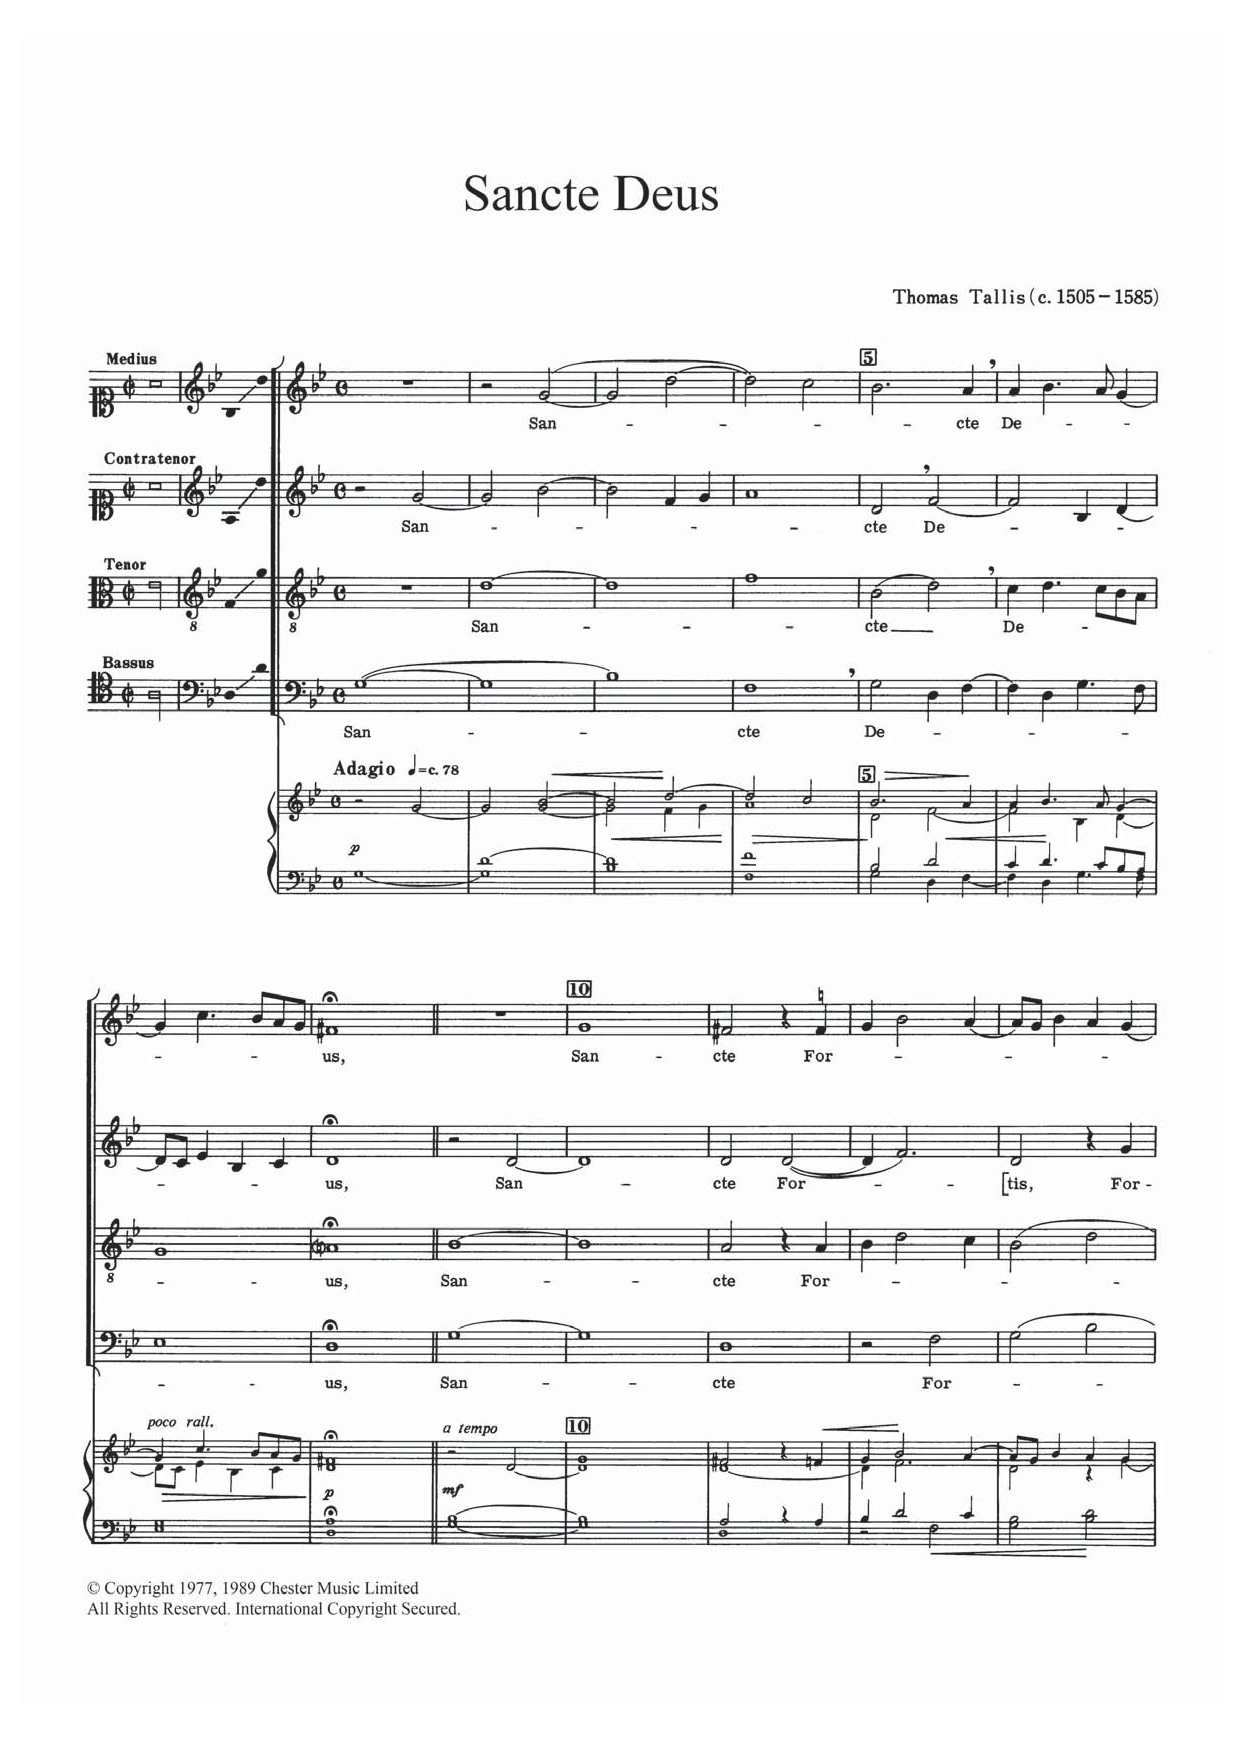 Download Thomas Tallis Sancte Deus Sheet Music and learn how to play SATB PDF digital score in minutes